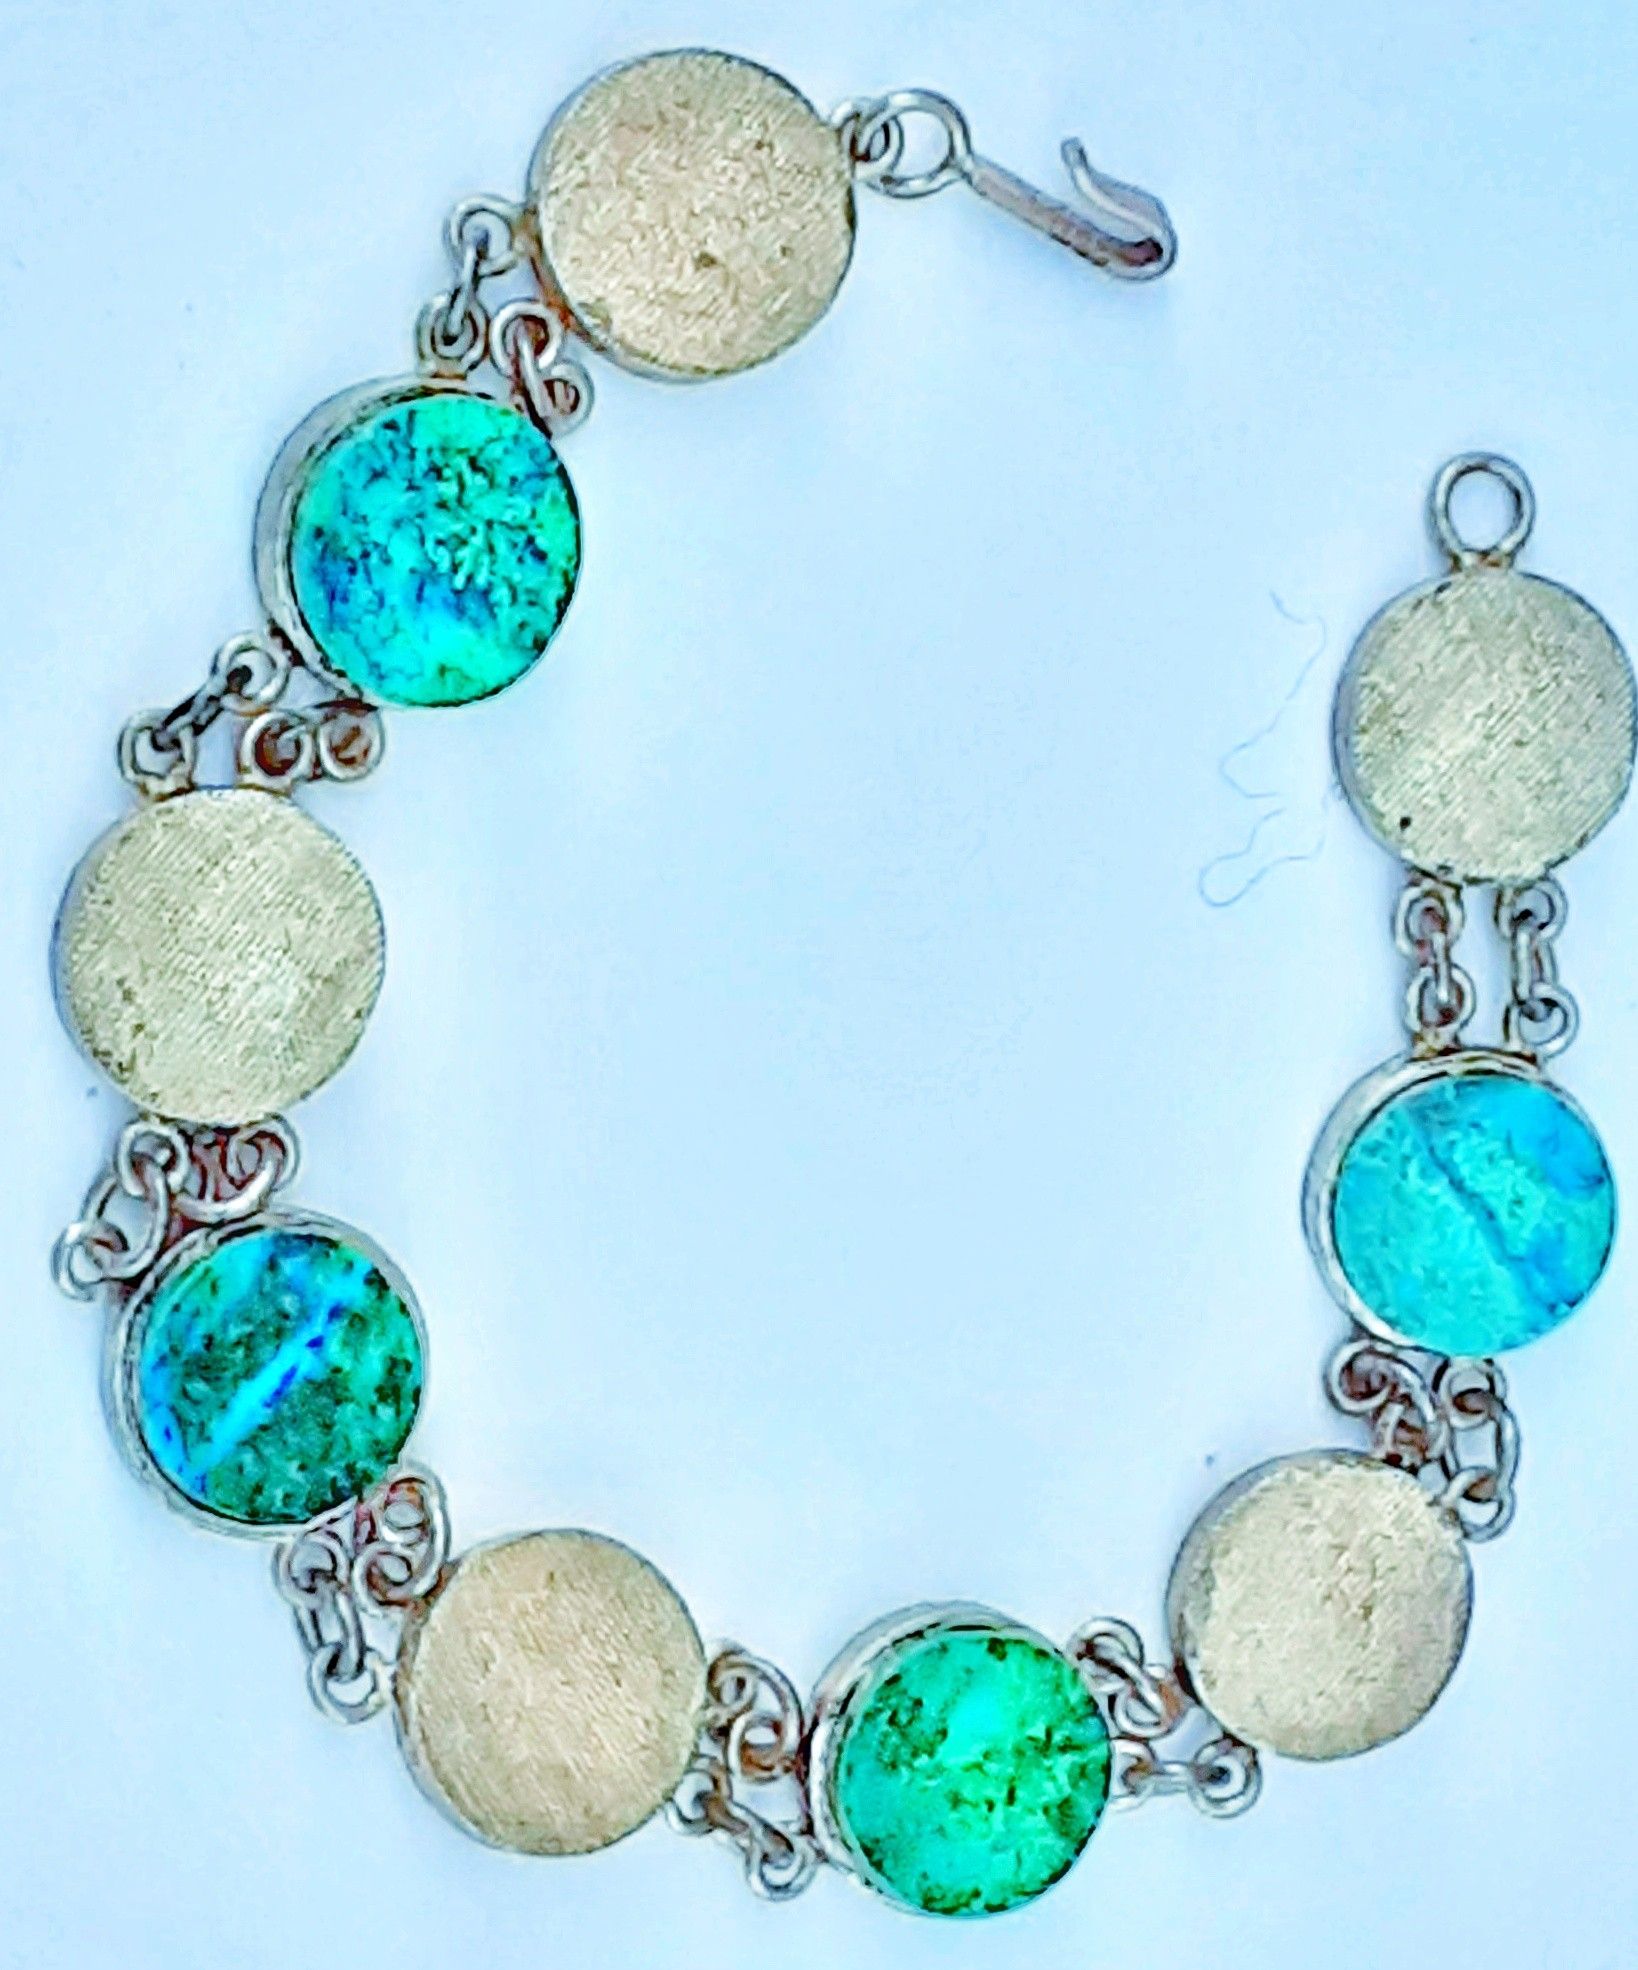 Mid century modern elegant sterling silver and turquoise bracelet